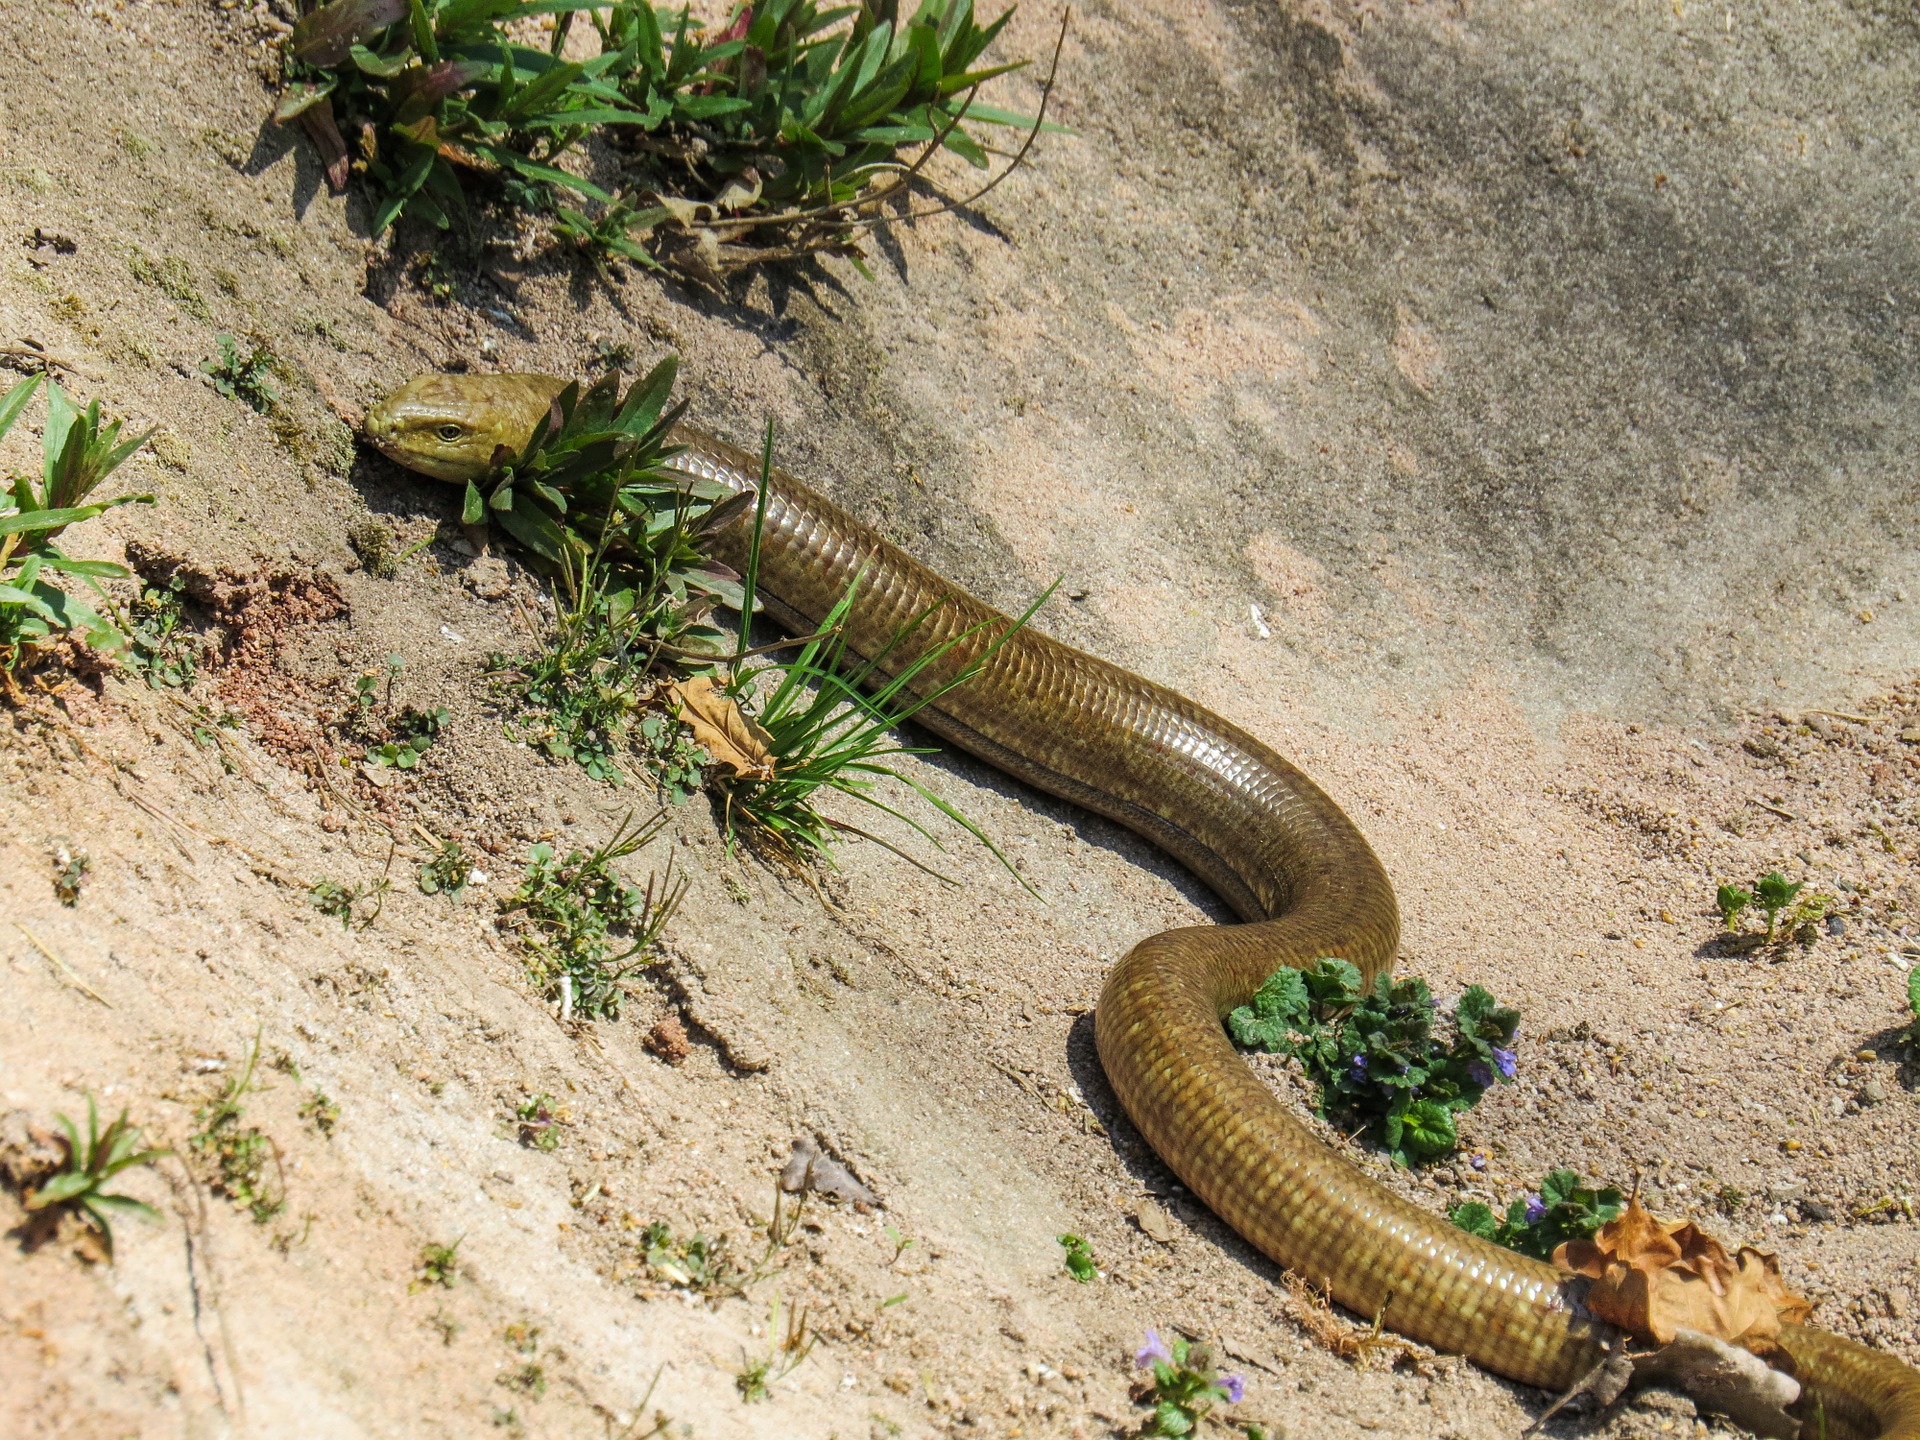 Wild snake photo